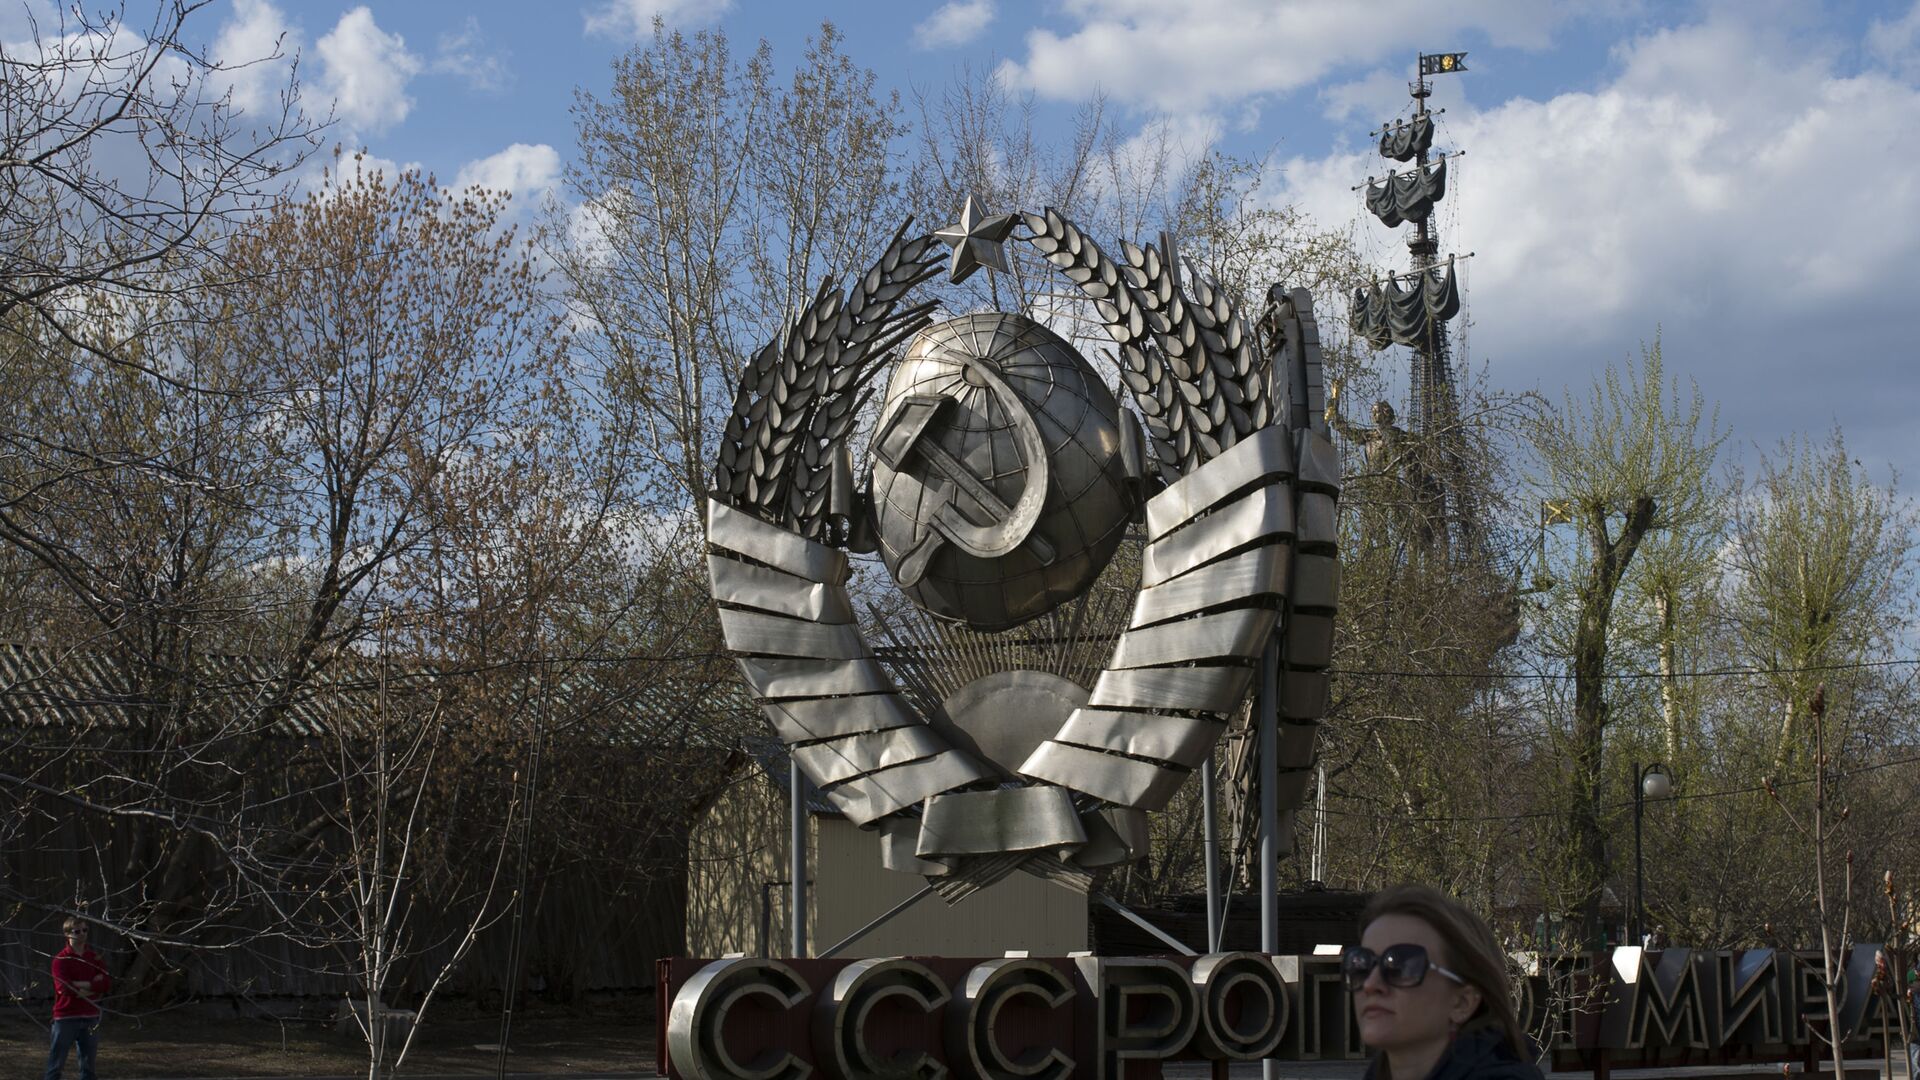 Grb SSSR-a u Parku umetnosti u Moskvi - Sputnik Srbija, 1920, 11.12.2021